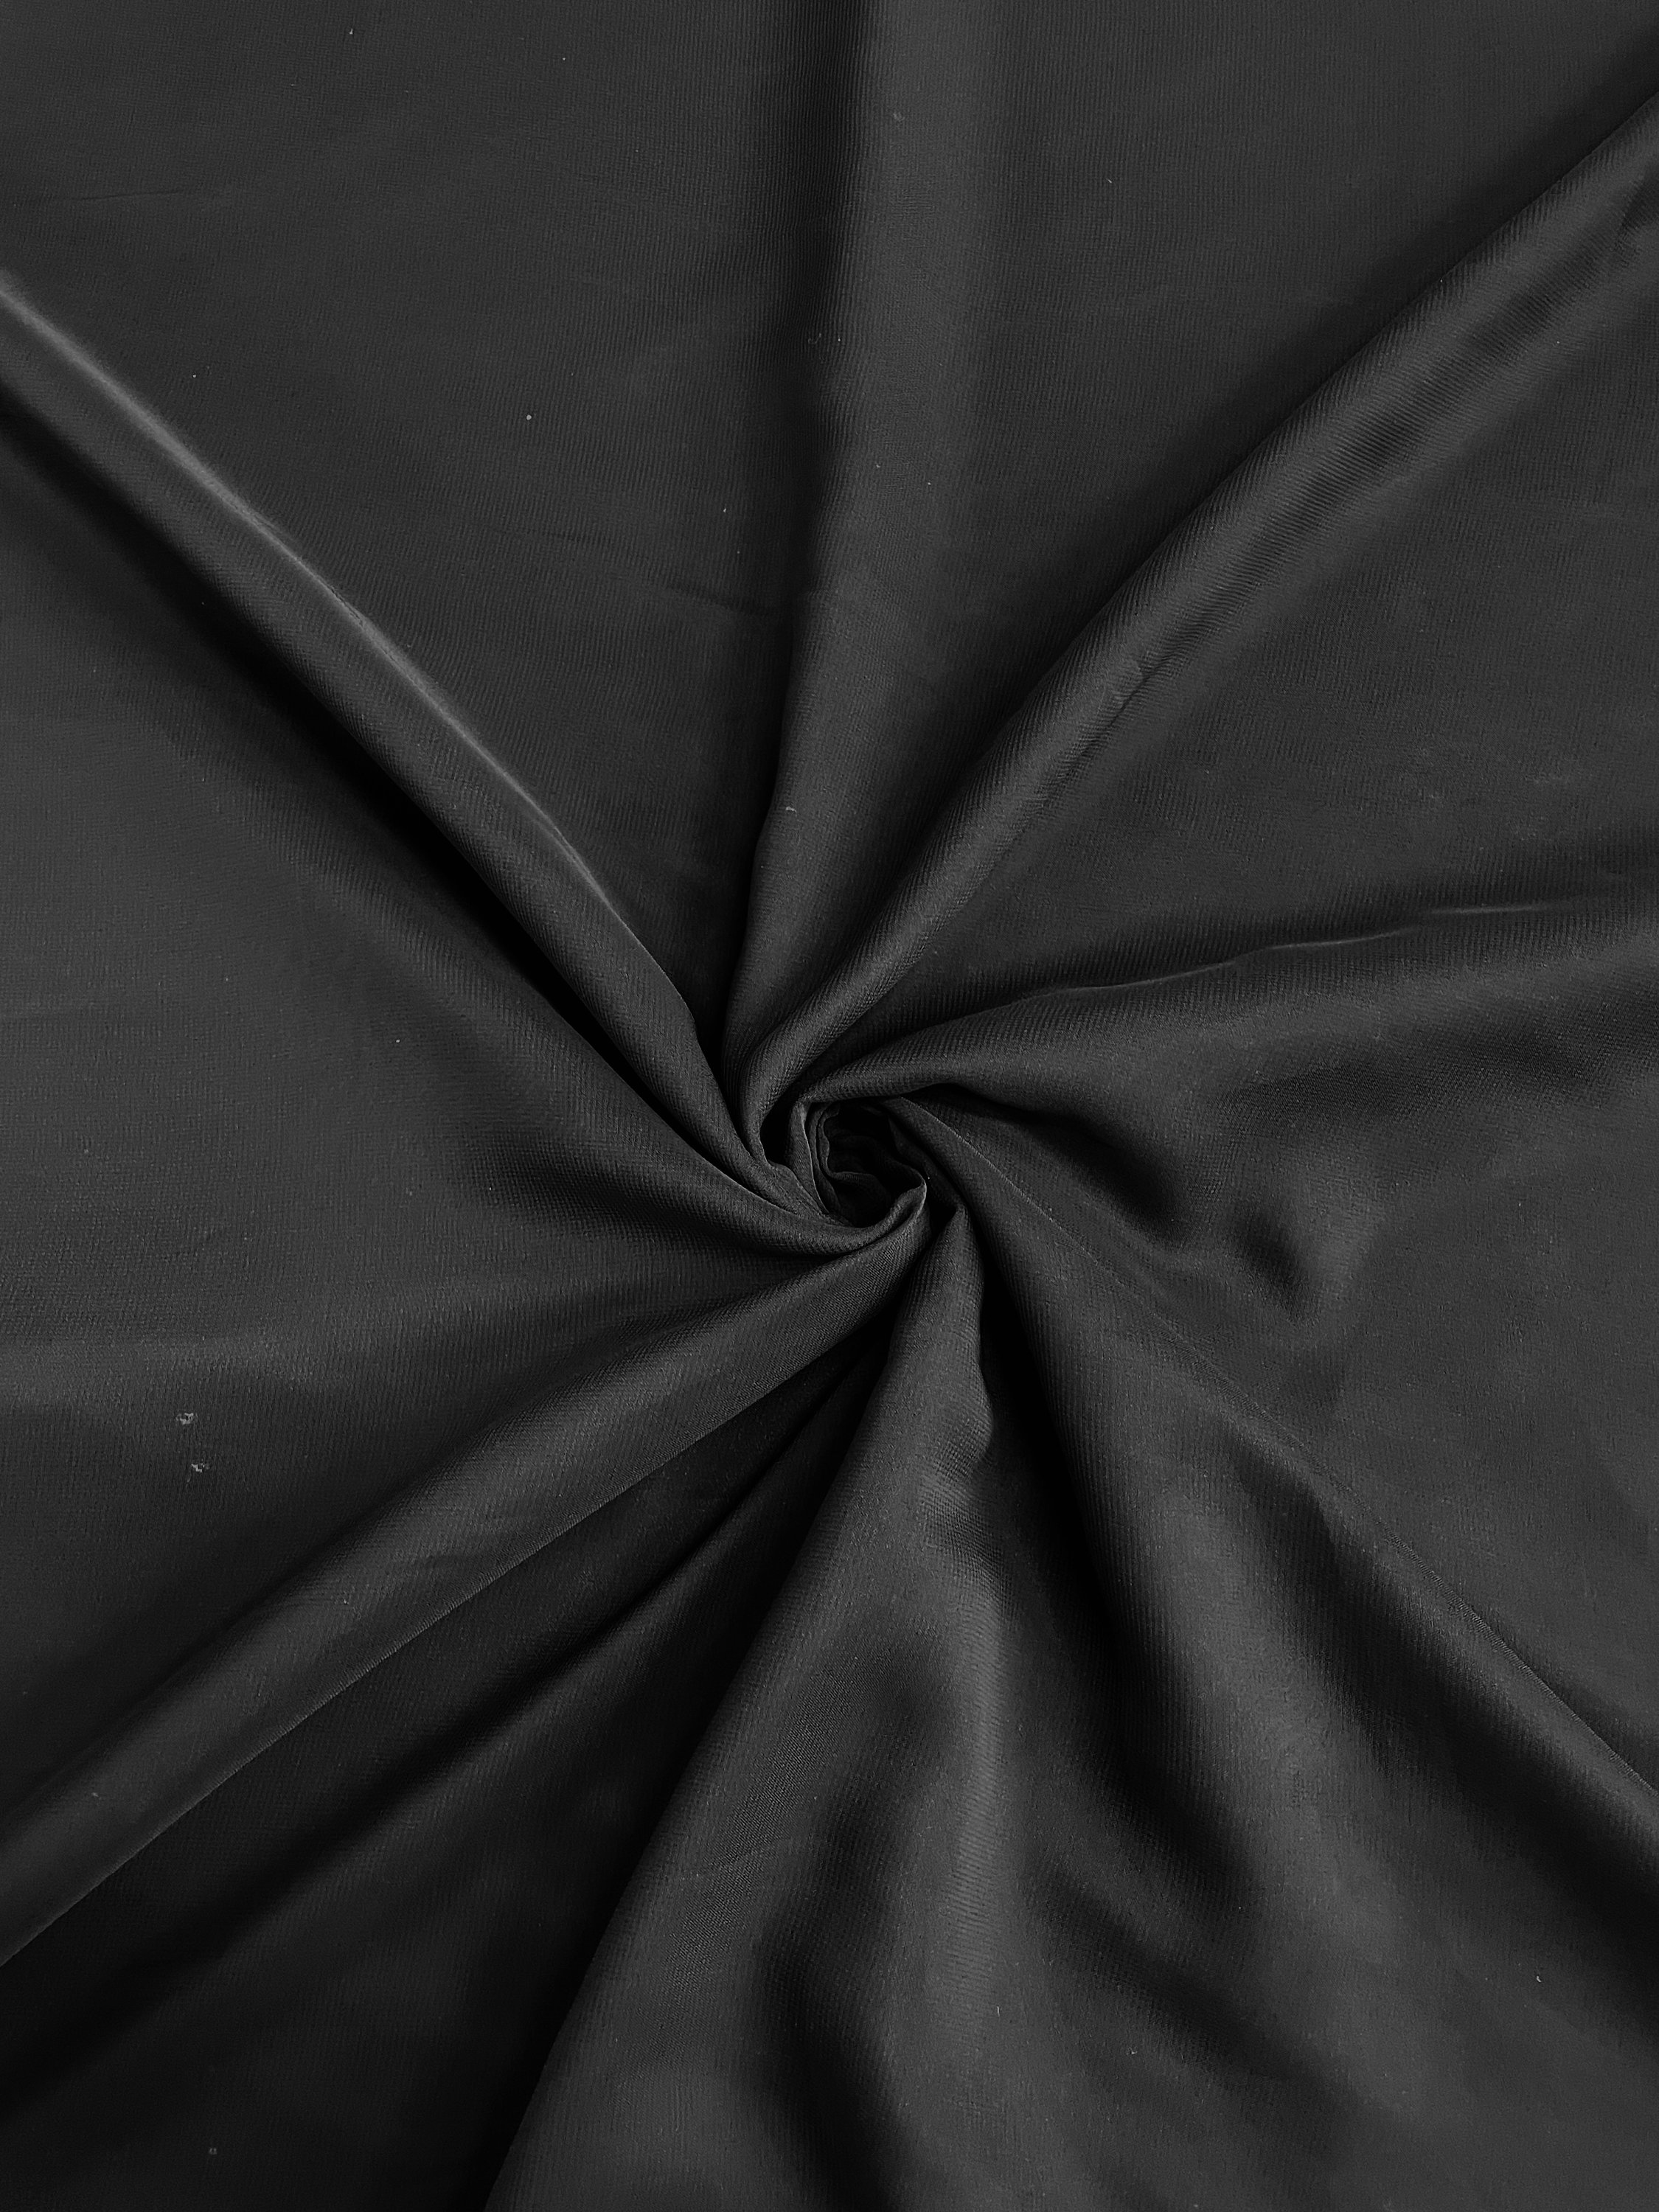 Black Chiffon Fabric - Etsy